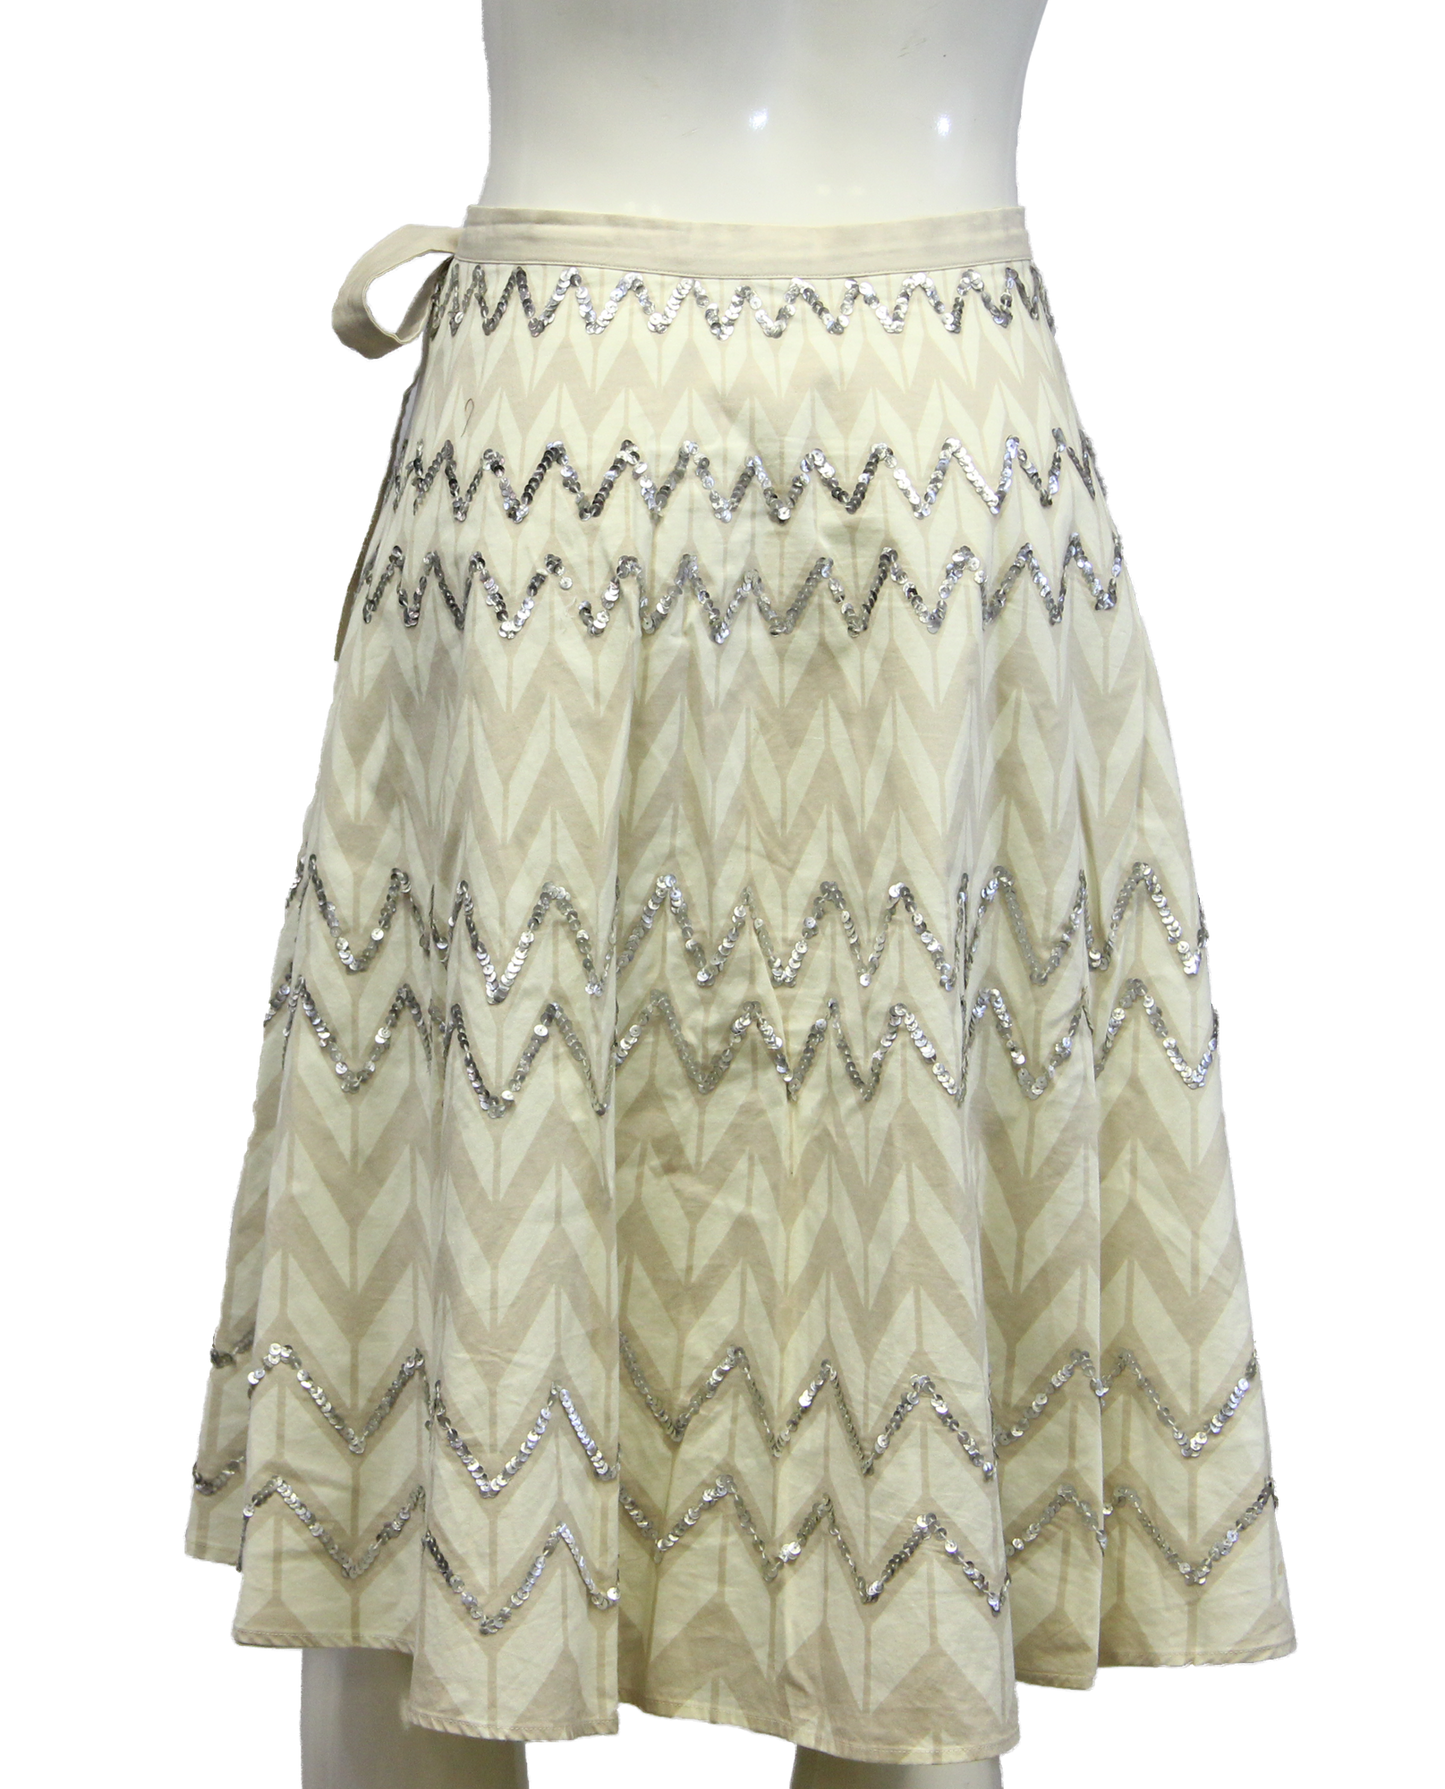 BCBG Max Azria Sequin Skirt Size L (SKU 000026) - Designers On A Dime - 1